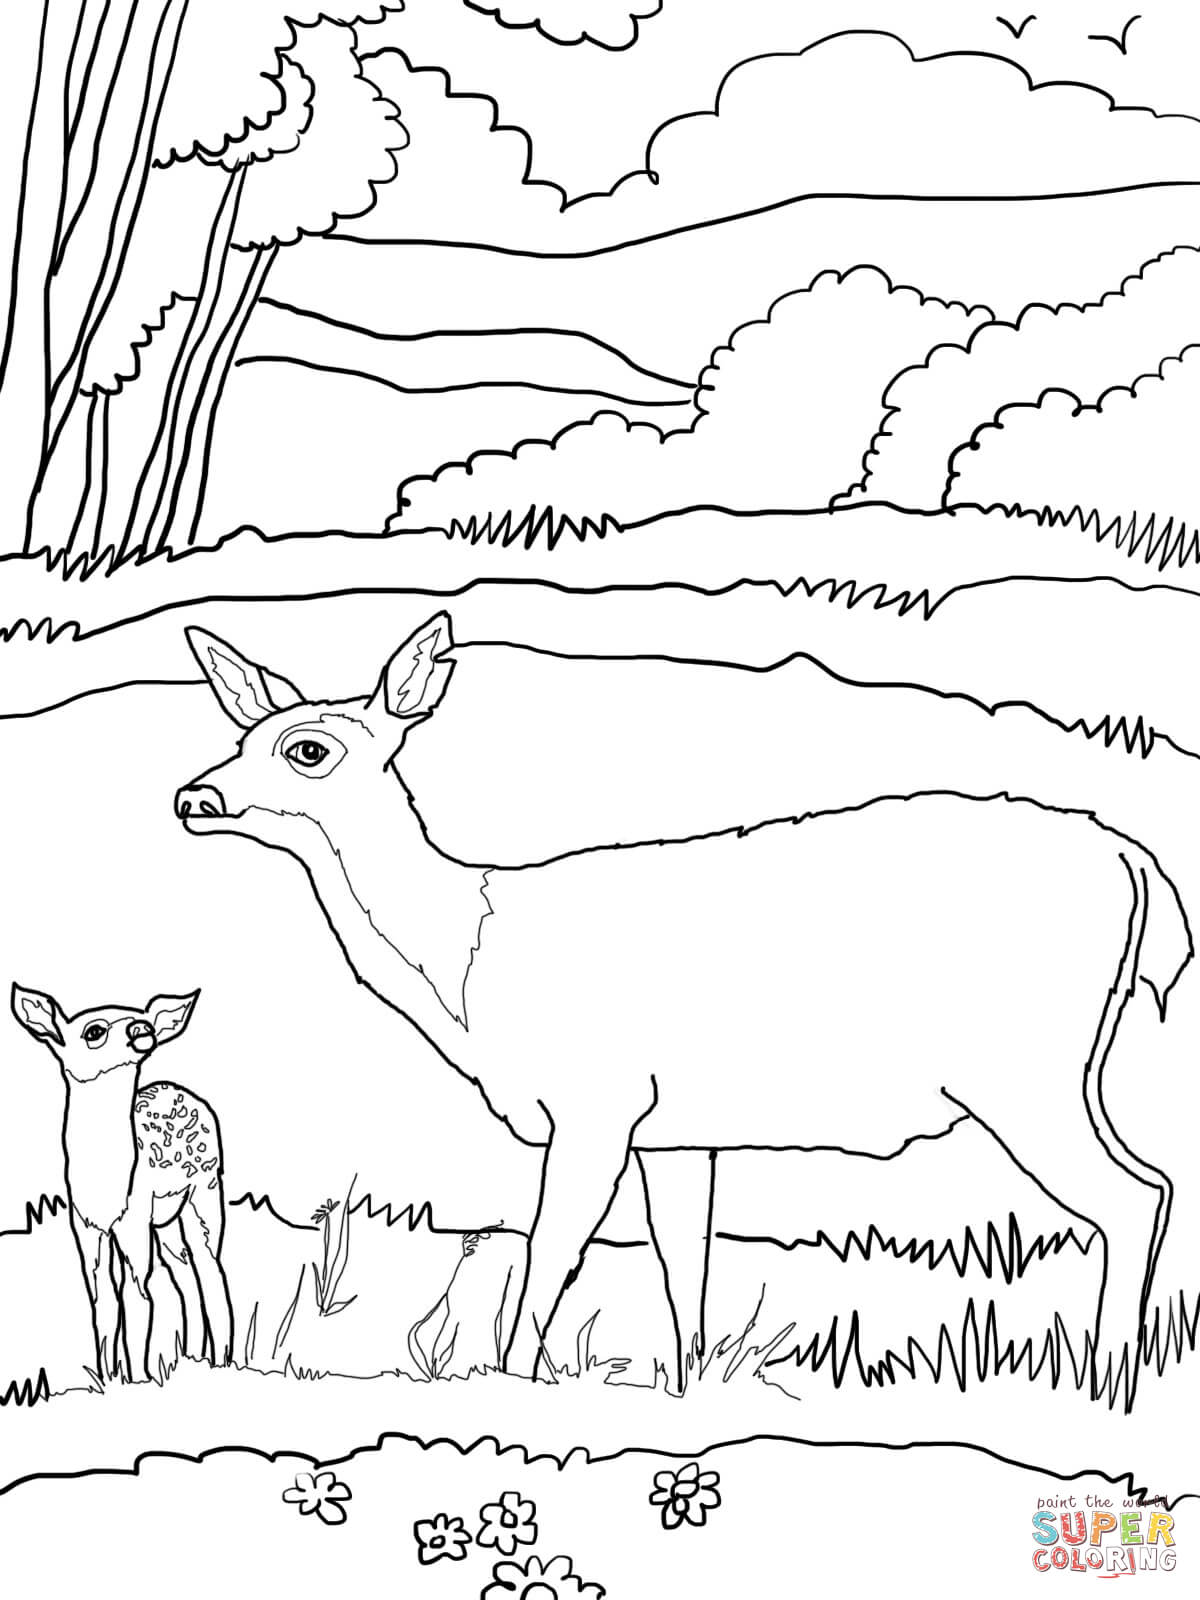 Mule Deer Coloring Page - Coloring Home